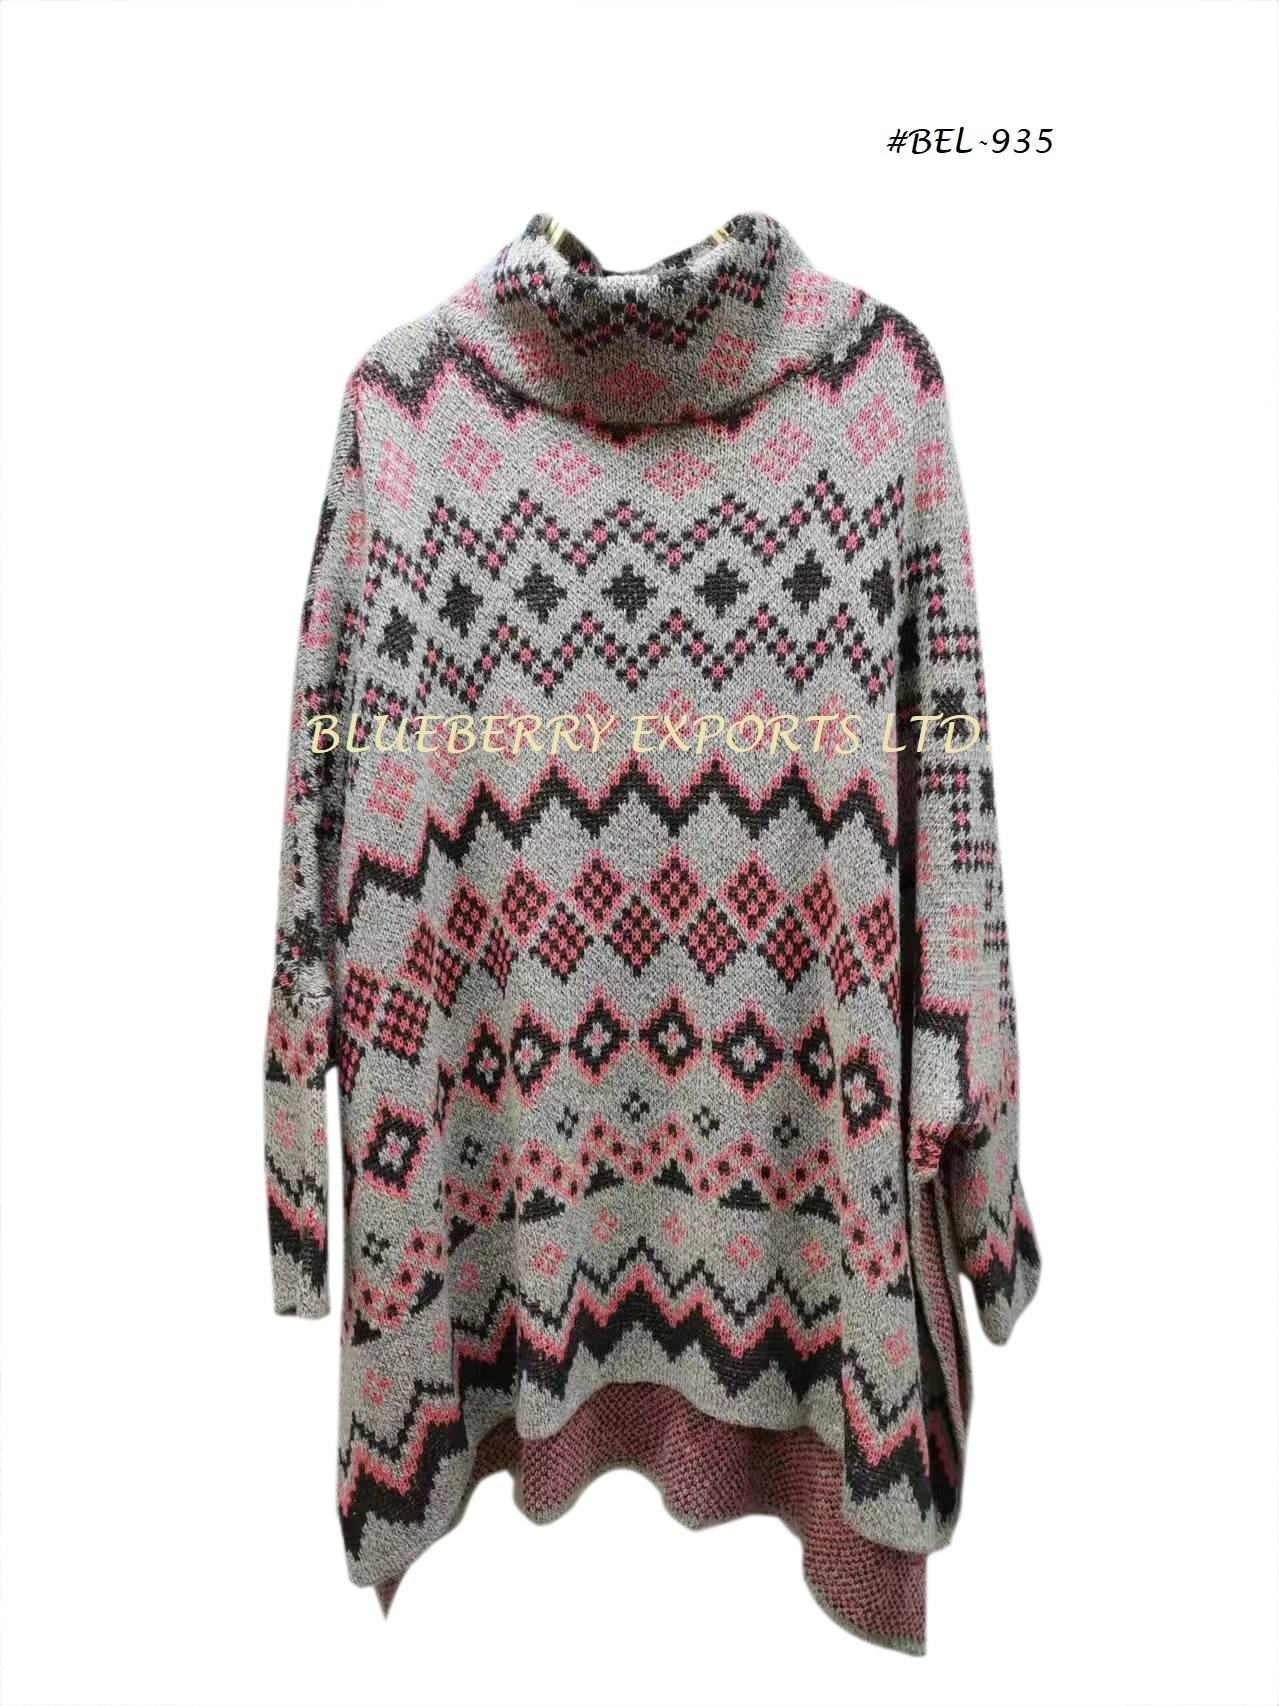 Sweater tops Knit turtleneck Pullover #BEL-935